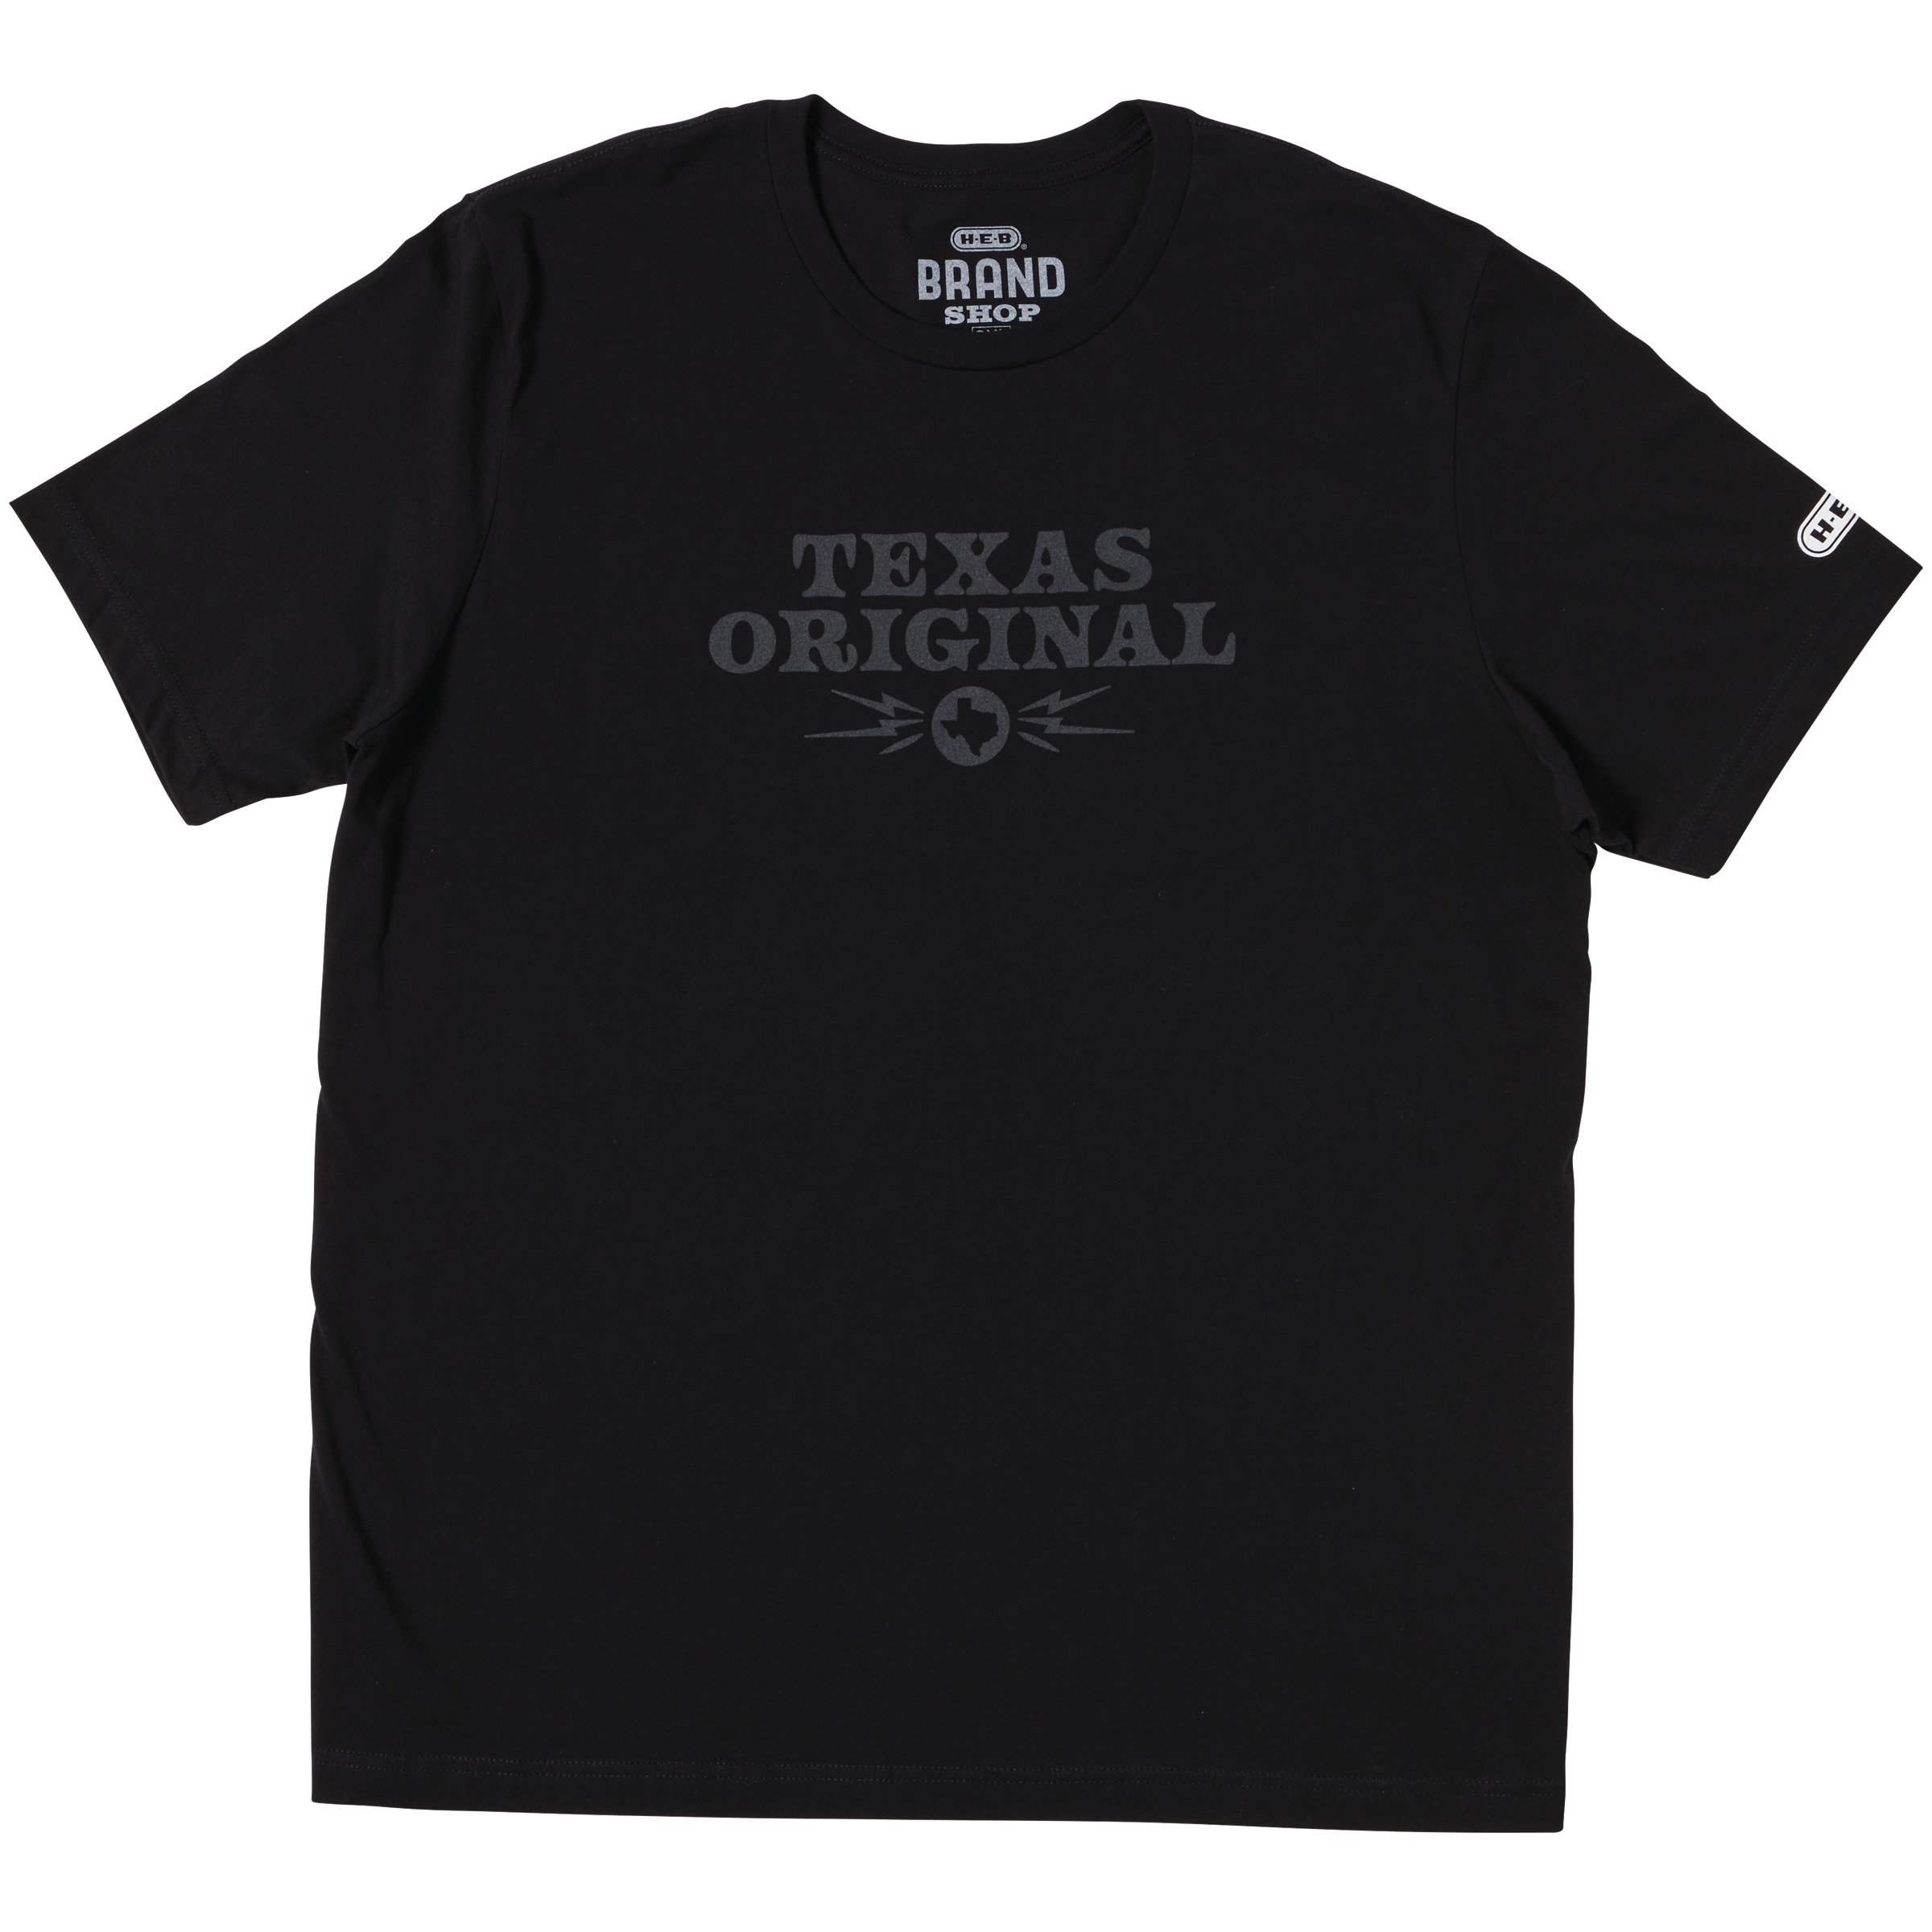 H-E-B Brand Shop Texas Original Adult T-Shirt Shirt - Black - Shop ...